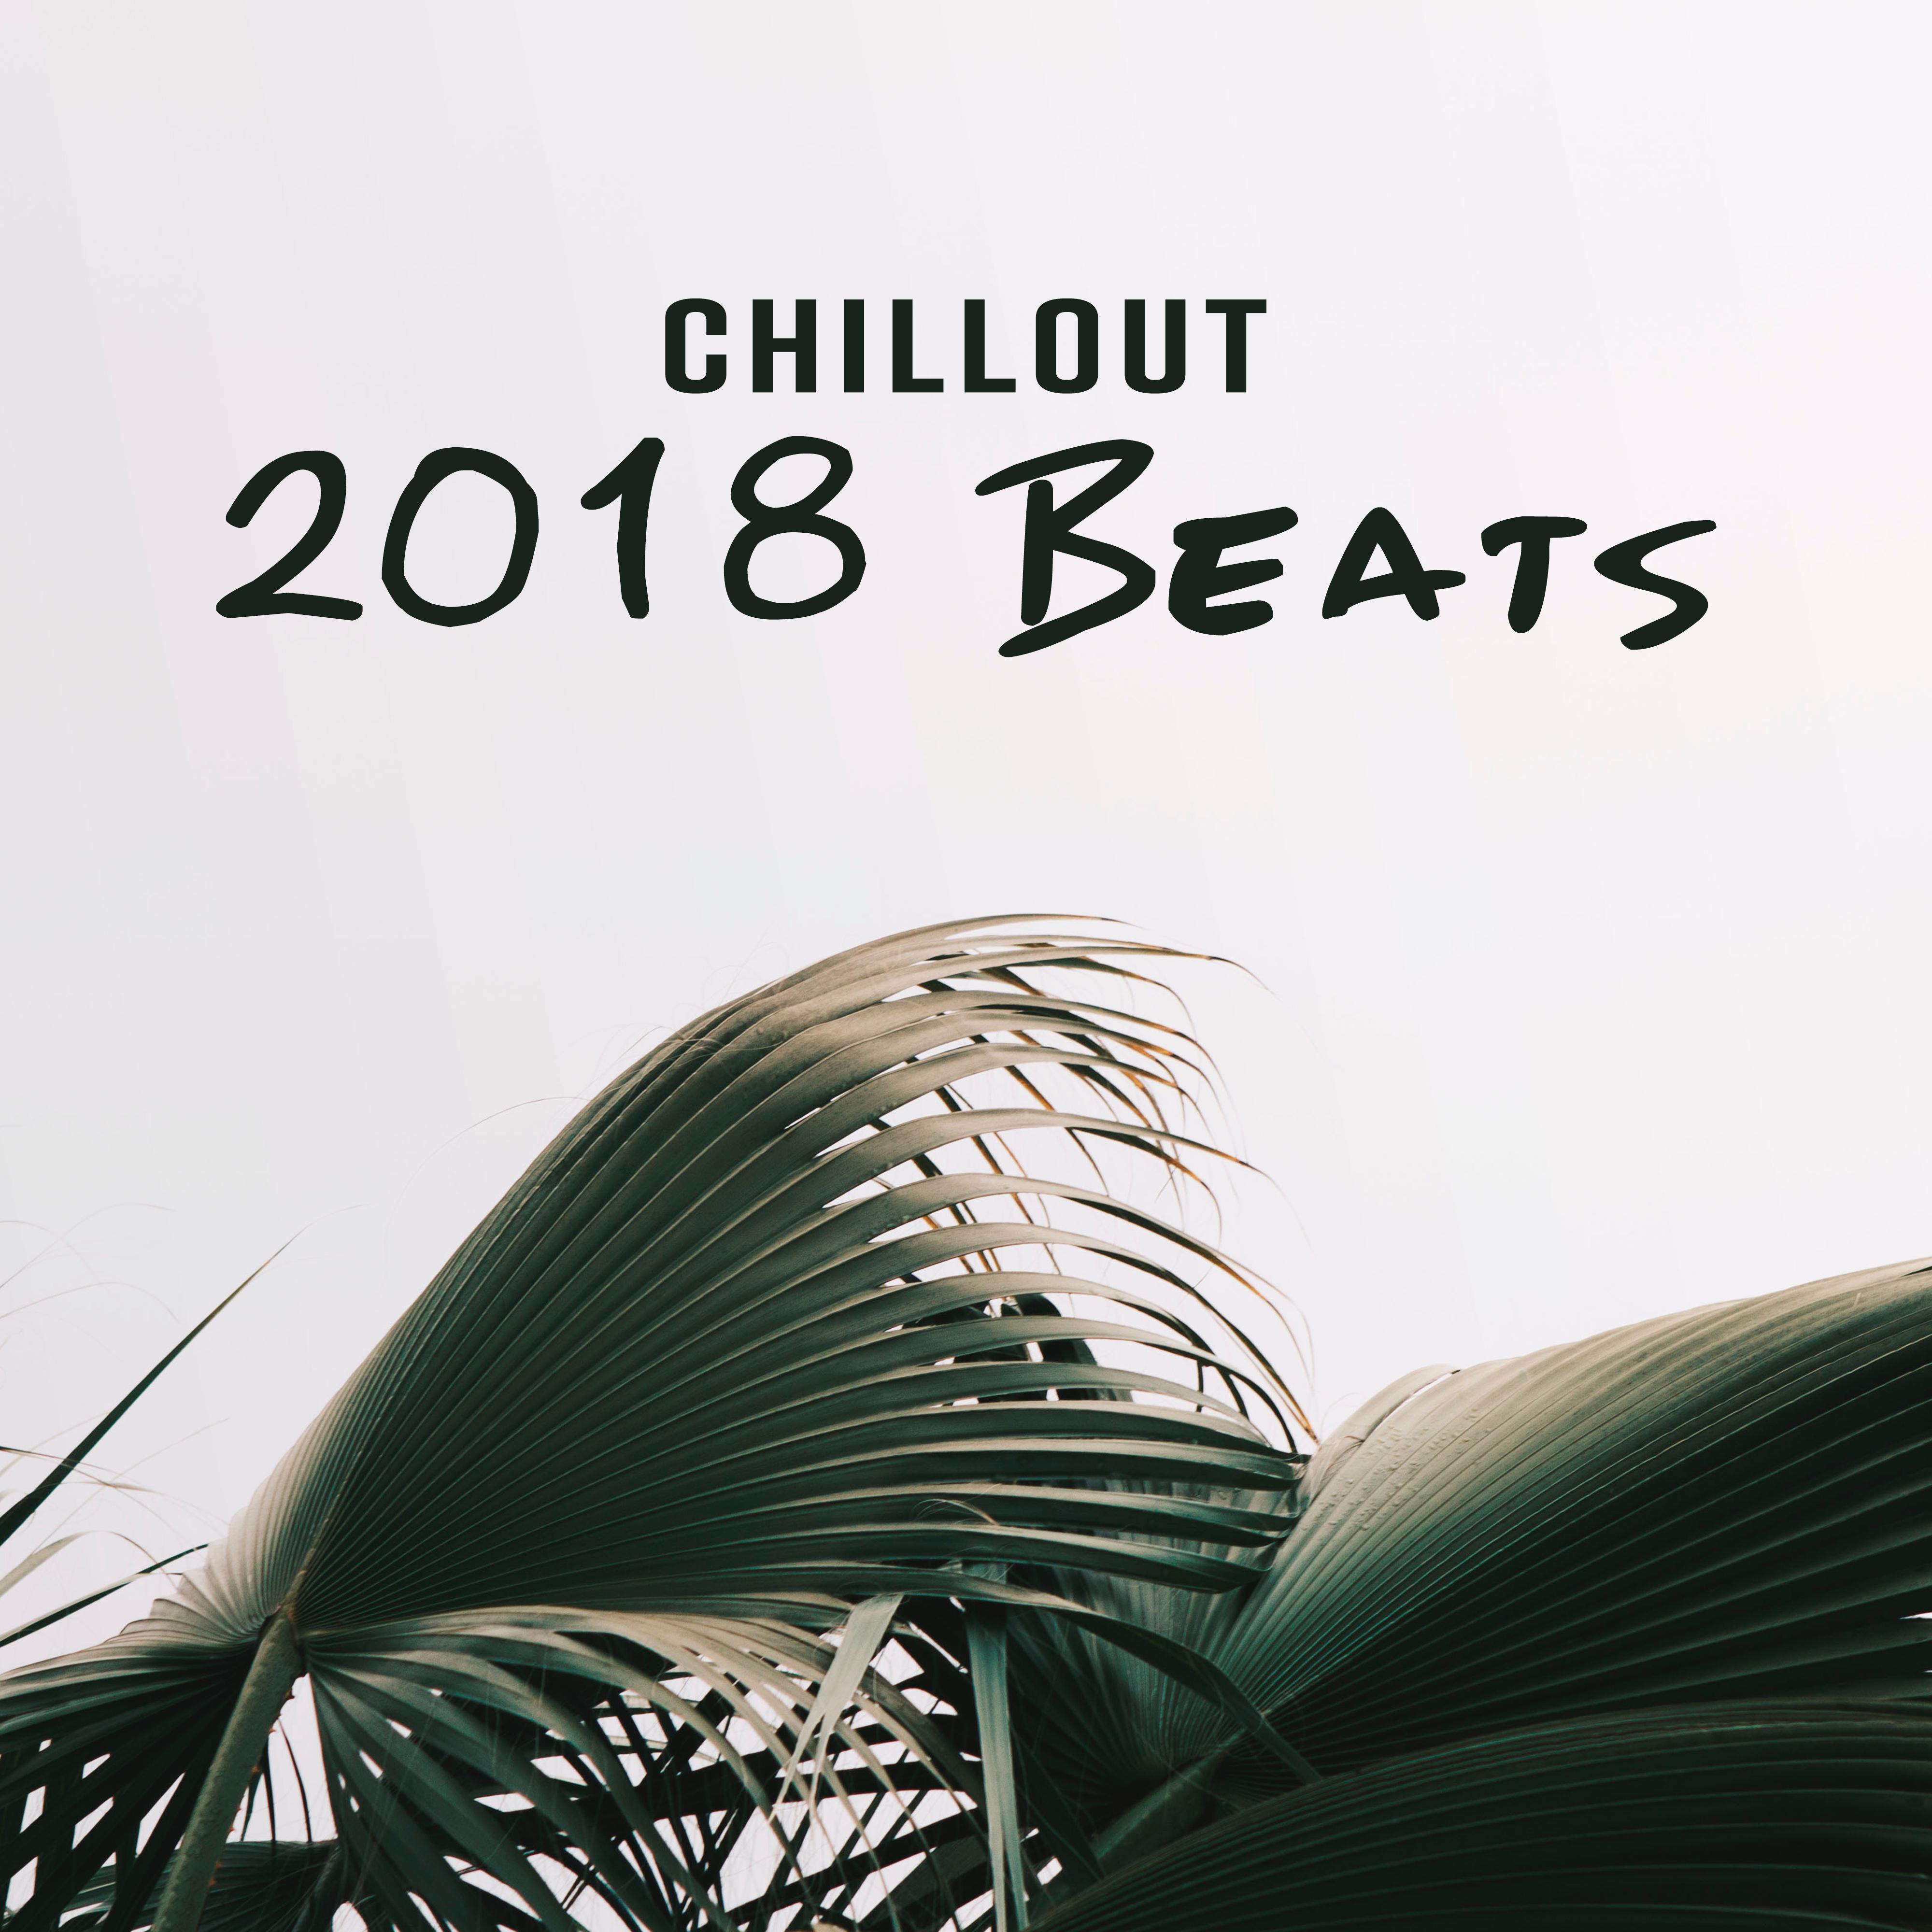 Chillout 2018 Beats